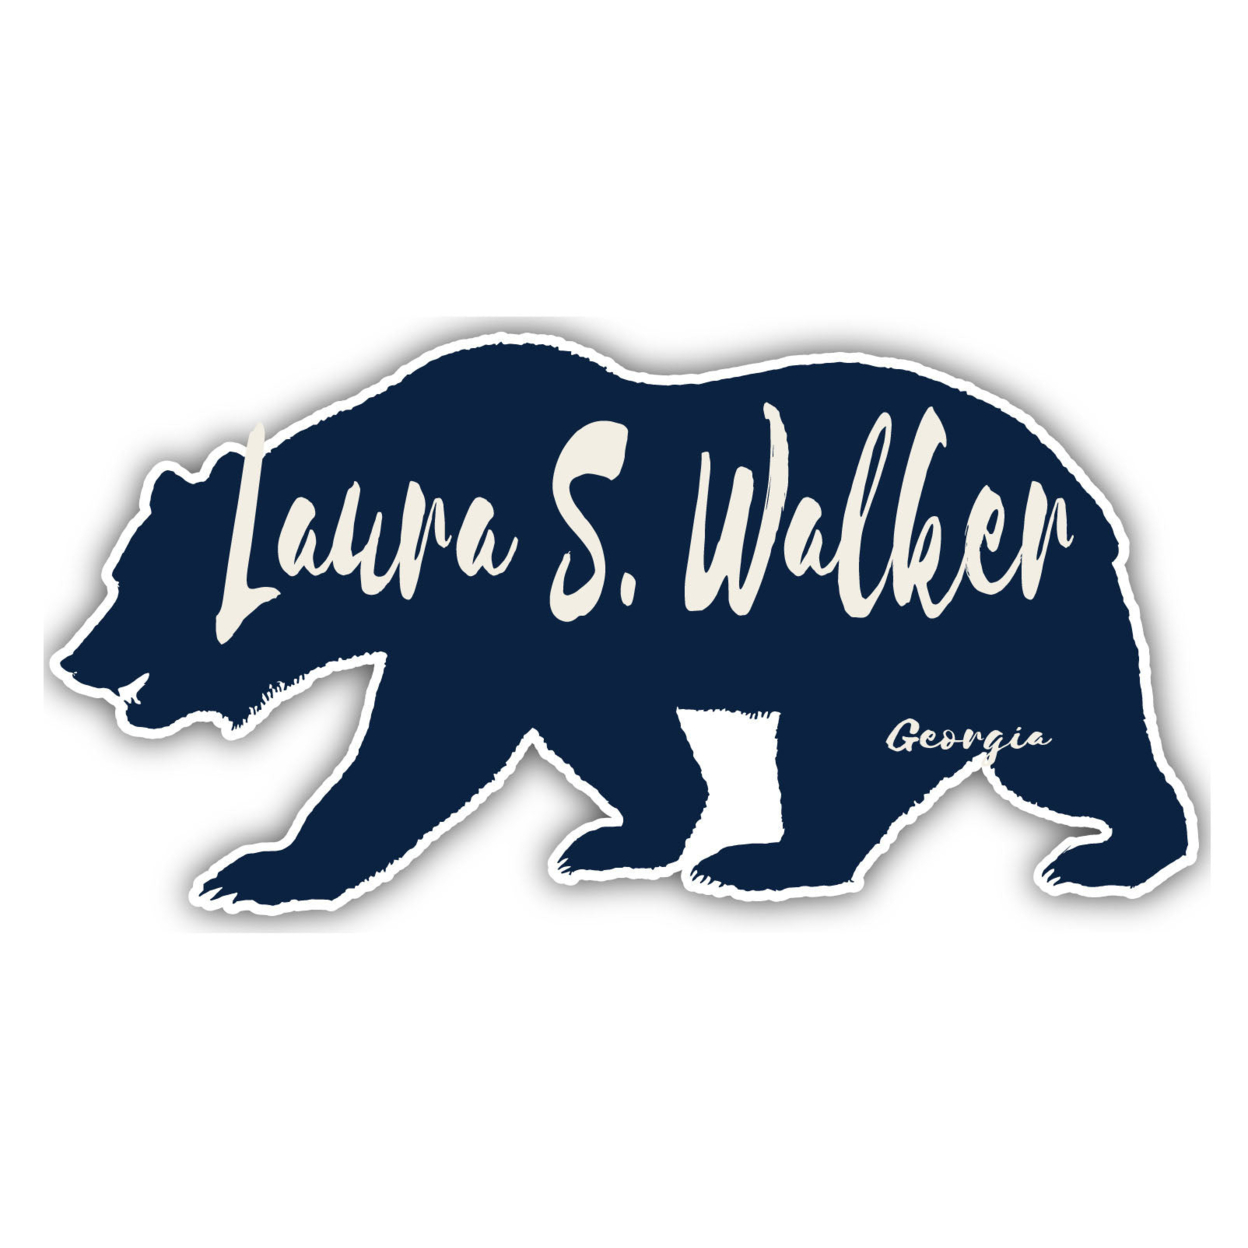 Laura S. Walker Georgia Souvenir Decorative Stickers (Choose Theme And Size) - 4-Inch, Bear